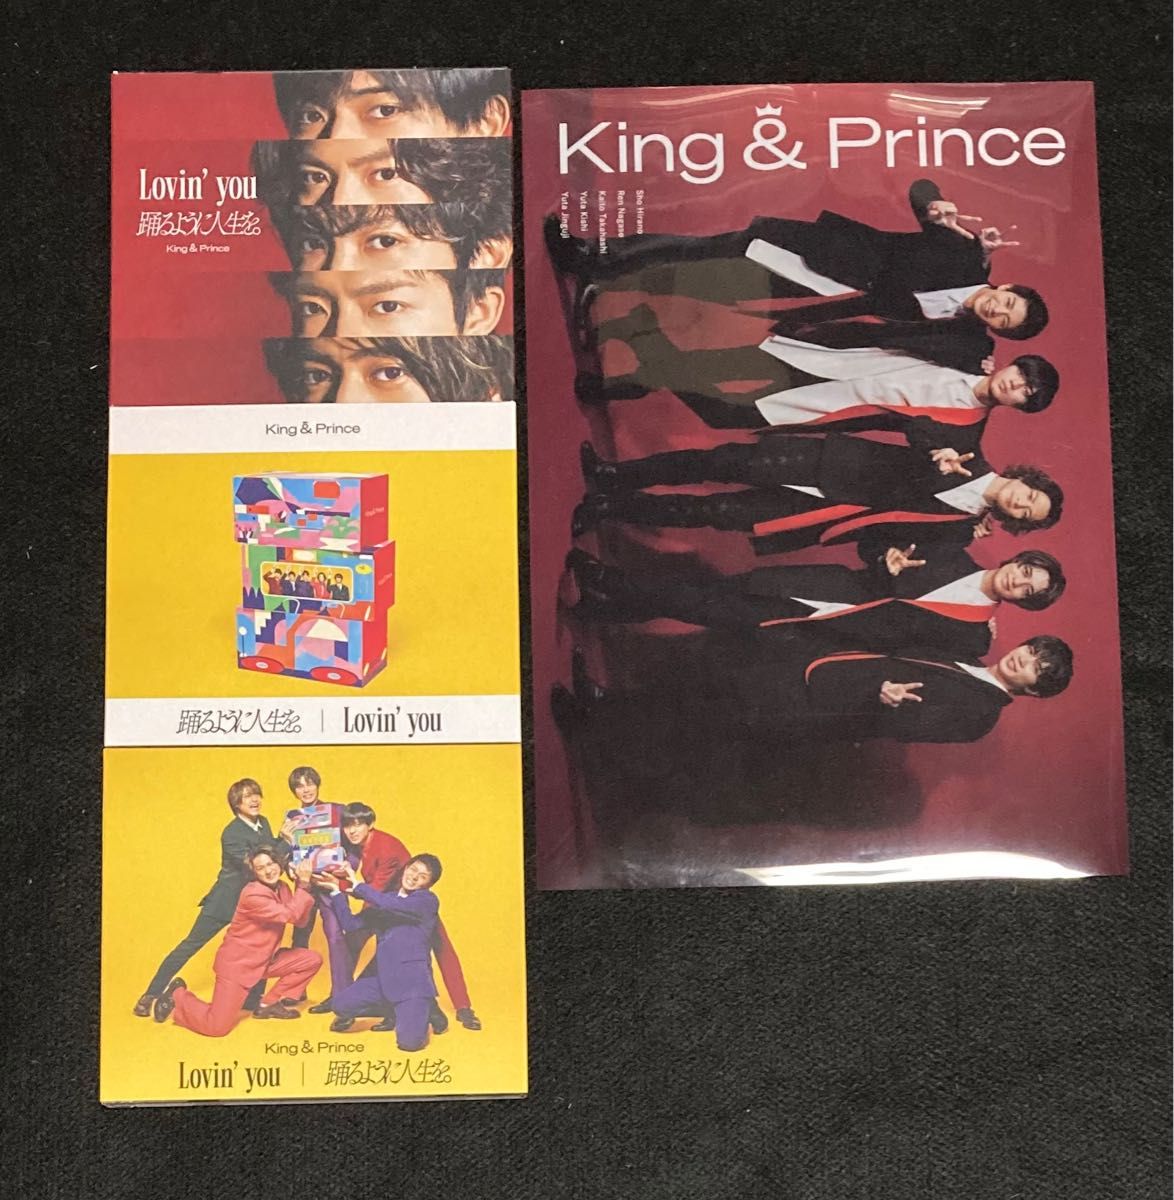 Lovin you/踊るように人生を (初回限定盤A+B+通常盤) King & Prince 